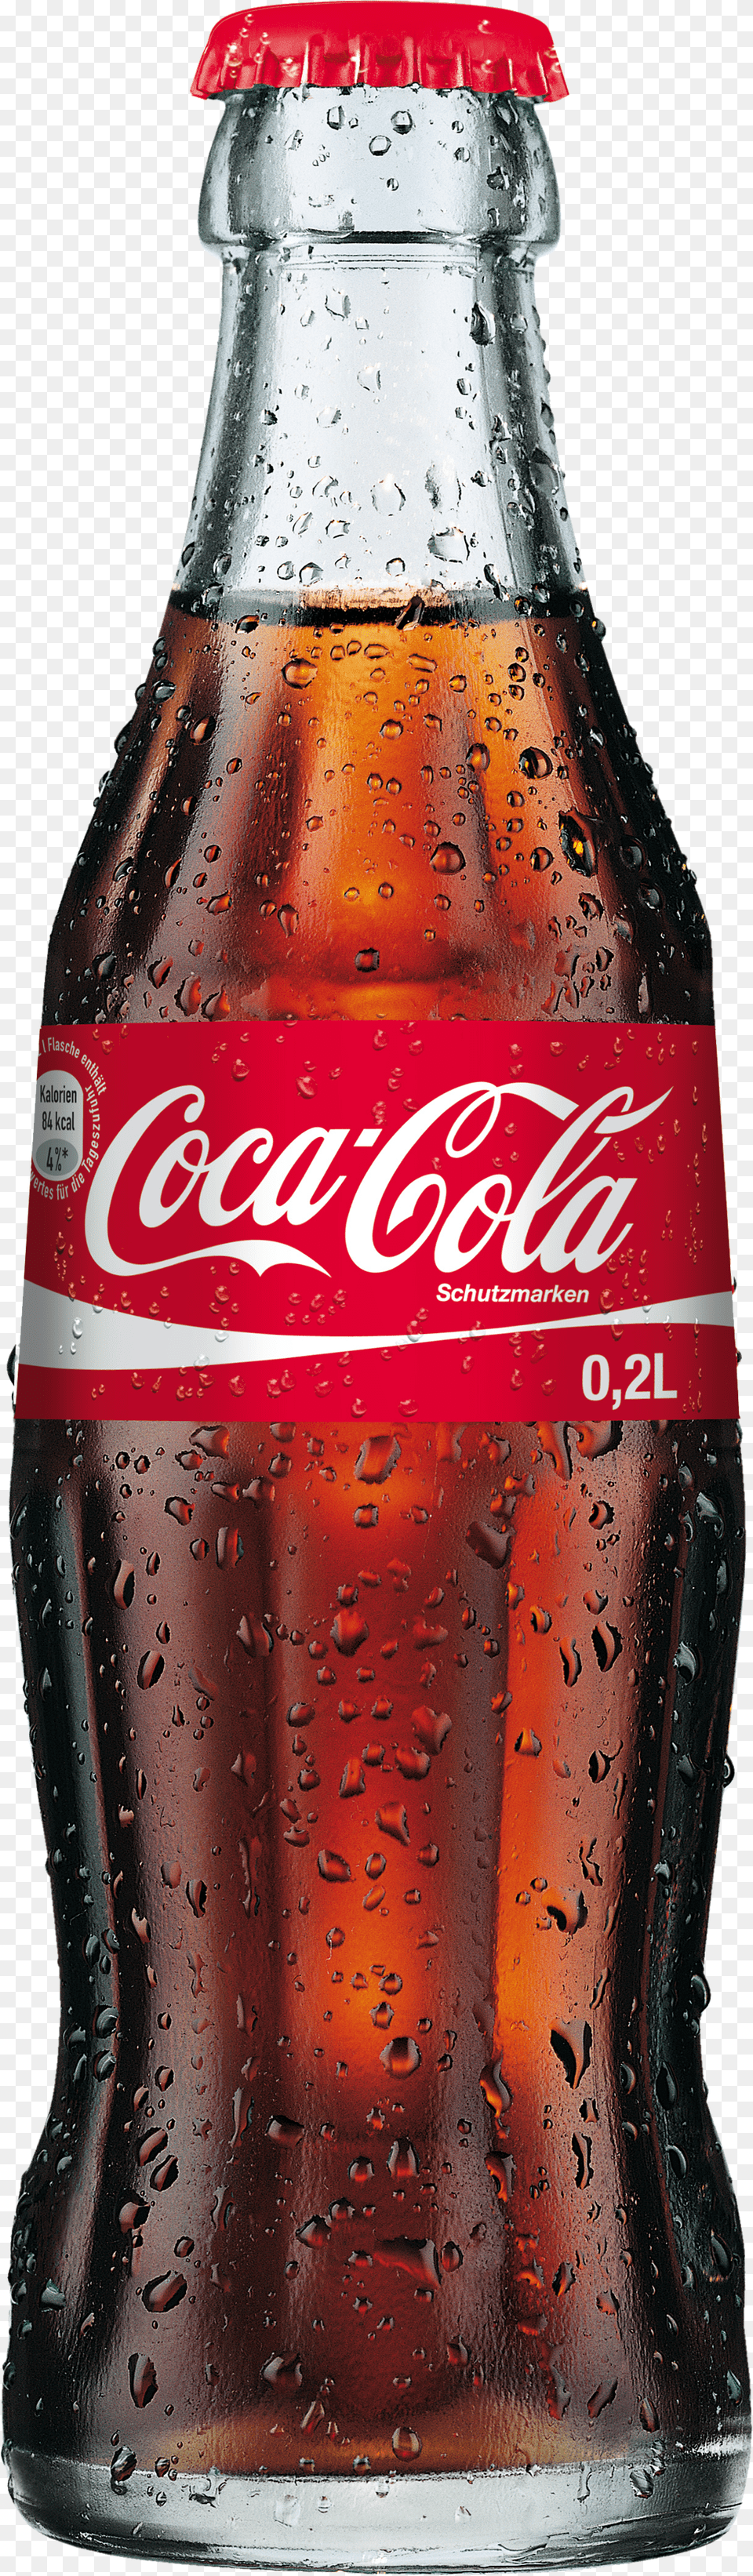 Chilled Coca Cola Bottle Png Image